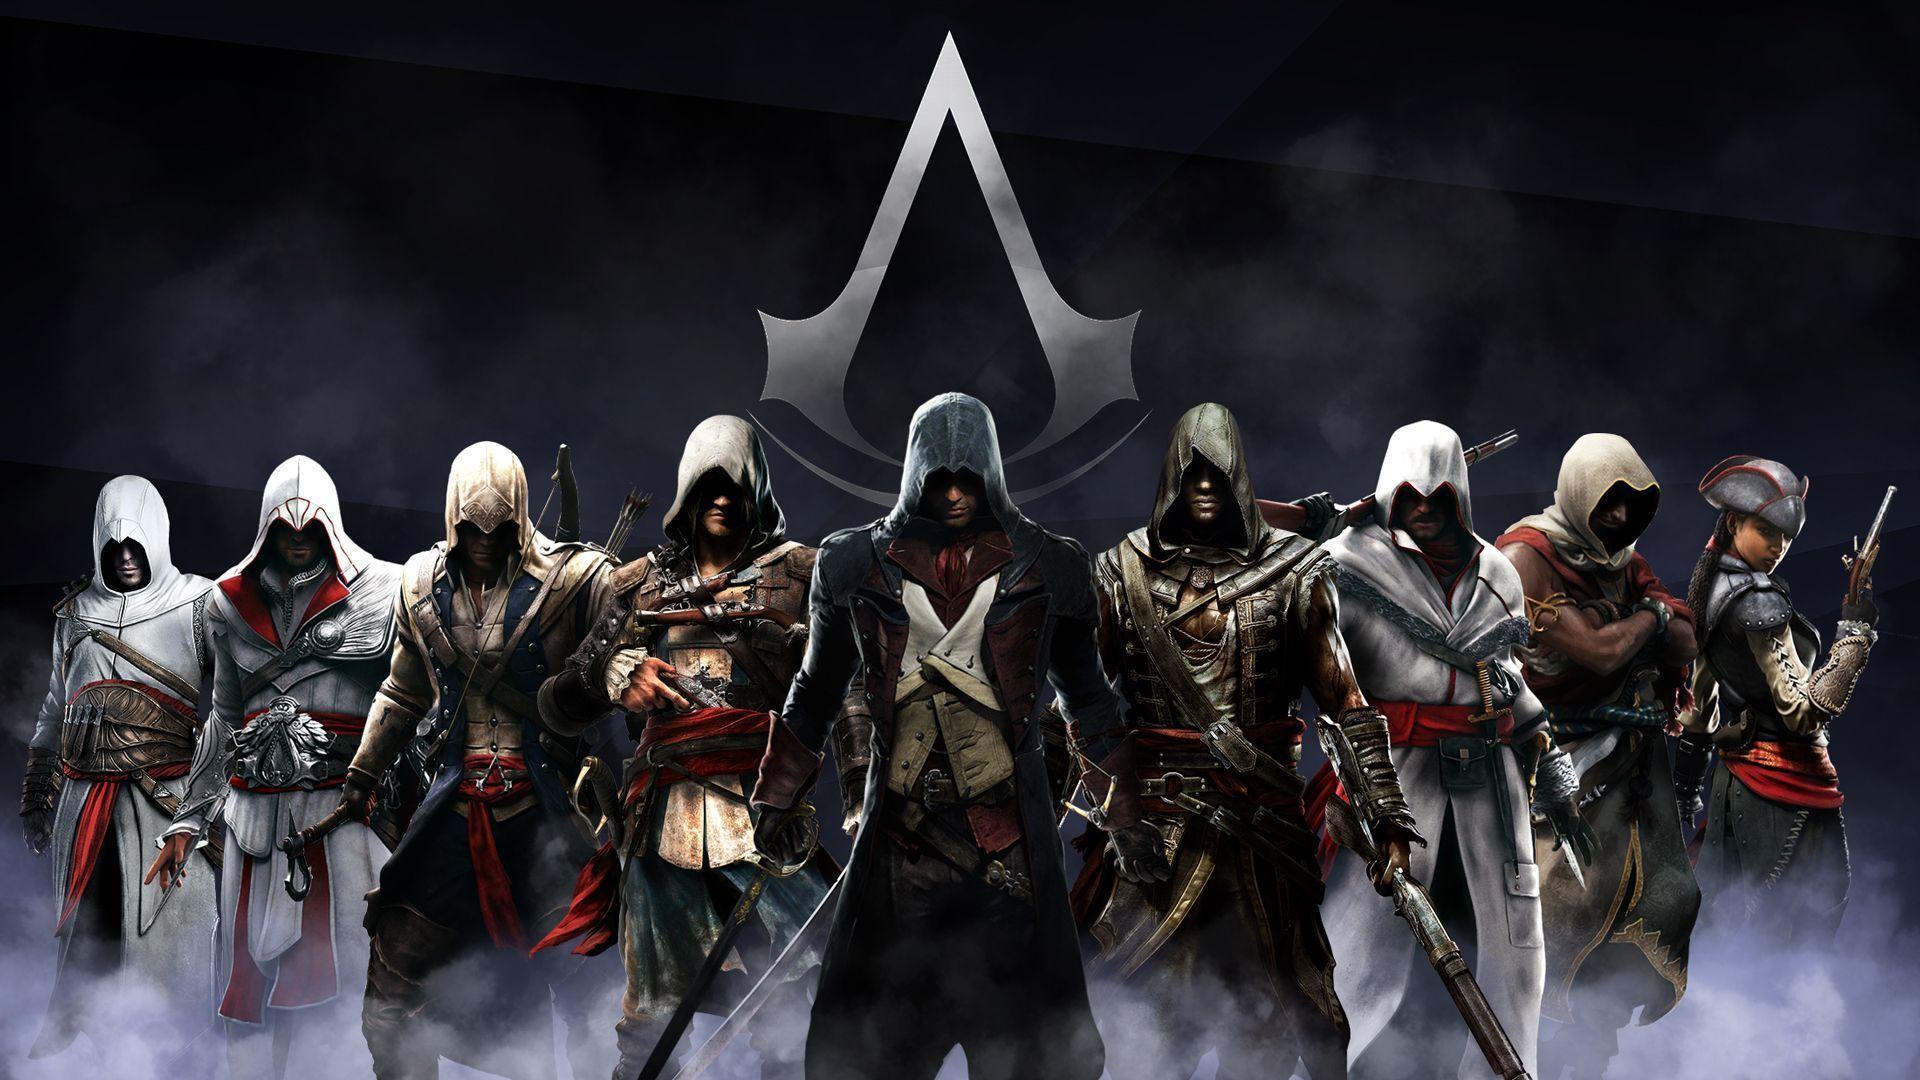 Assassins Creed Mirage 4K Wallpaper by KasusPathos on DeviantArt